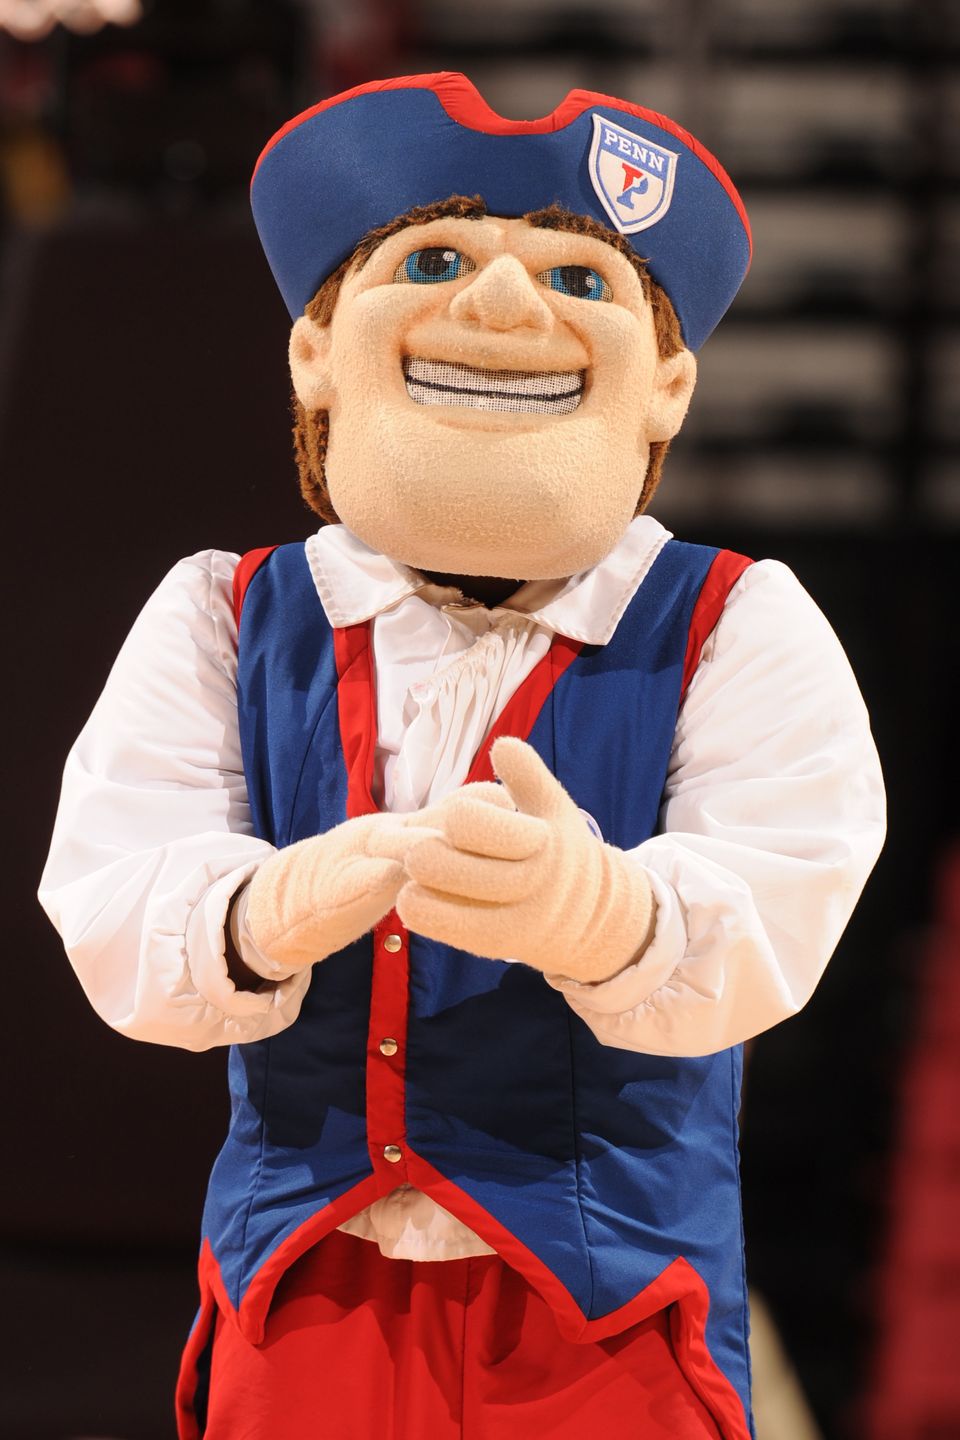 The Head Of the University of Pennsylvania Mascot, The Quaker